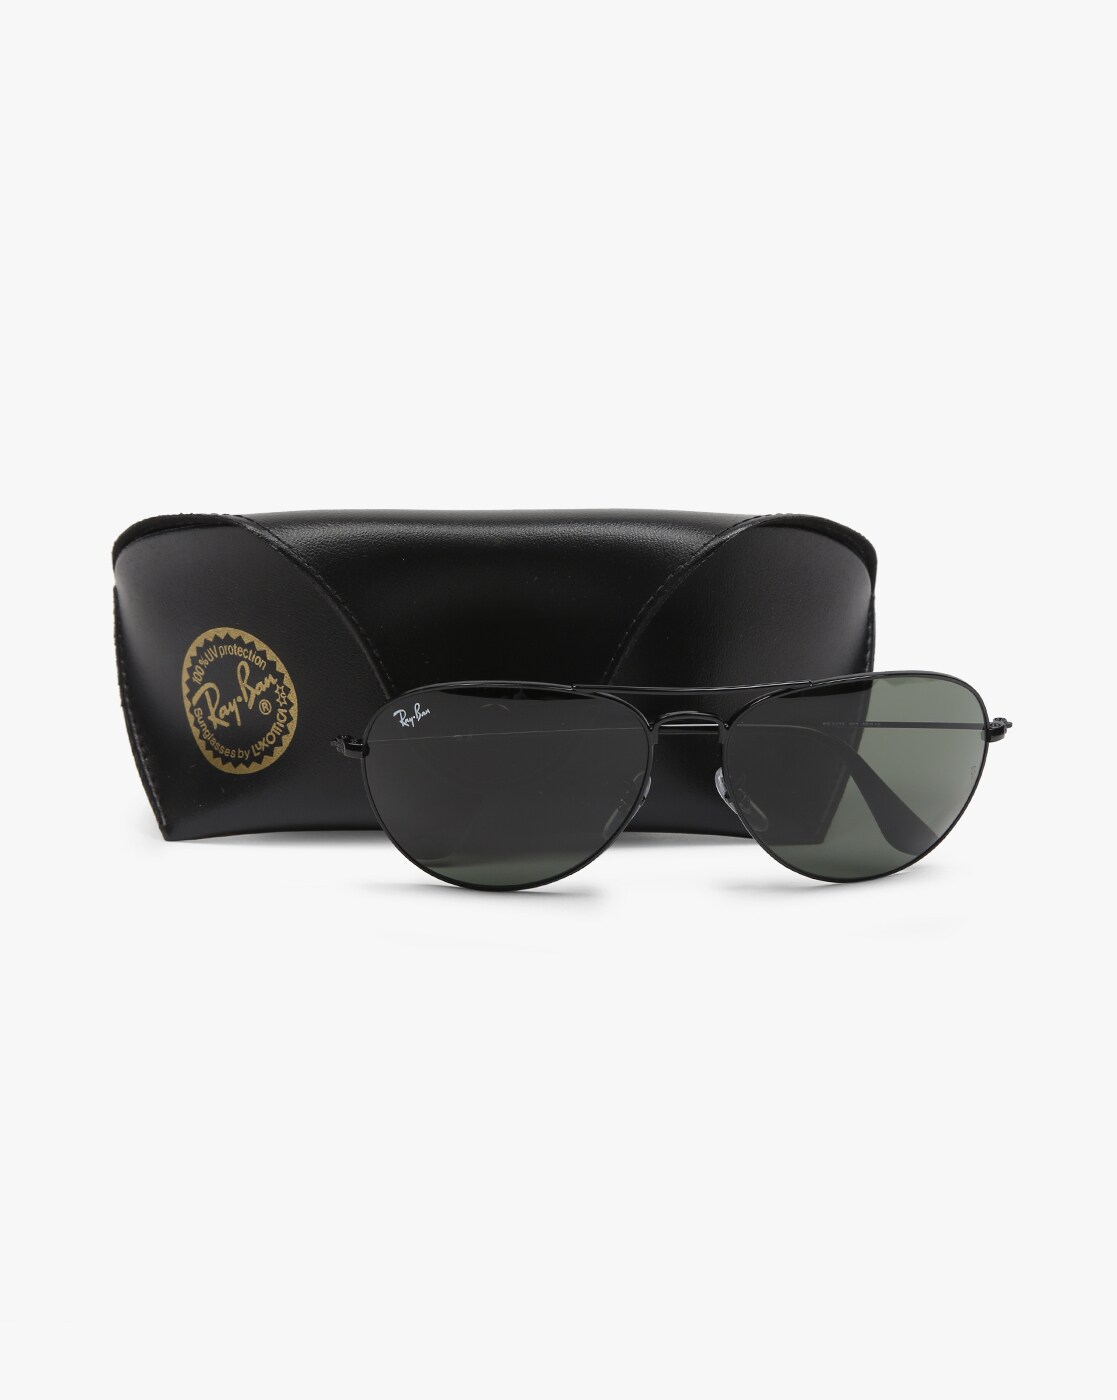 Buy Joe Black Rectangular Sunglasses JB-757-C1P Online @ ₹1799 from  ShopClues